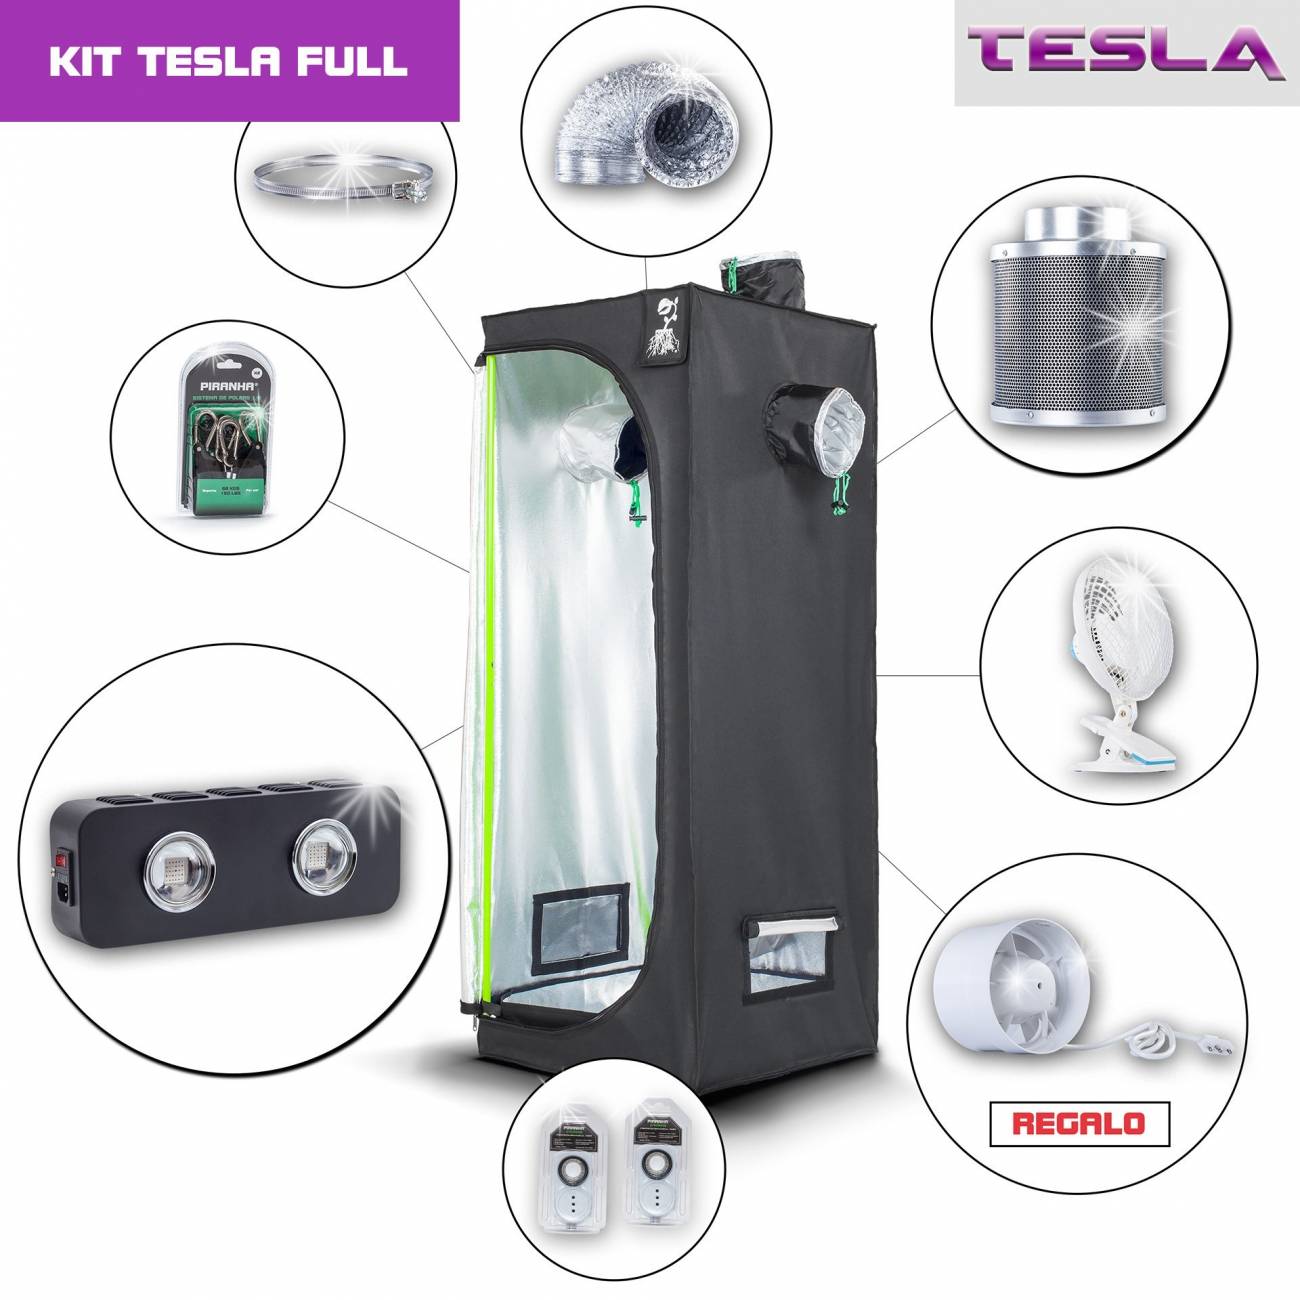 Kit Tesla 60 - T180W Completo